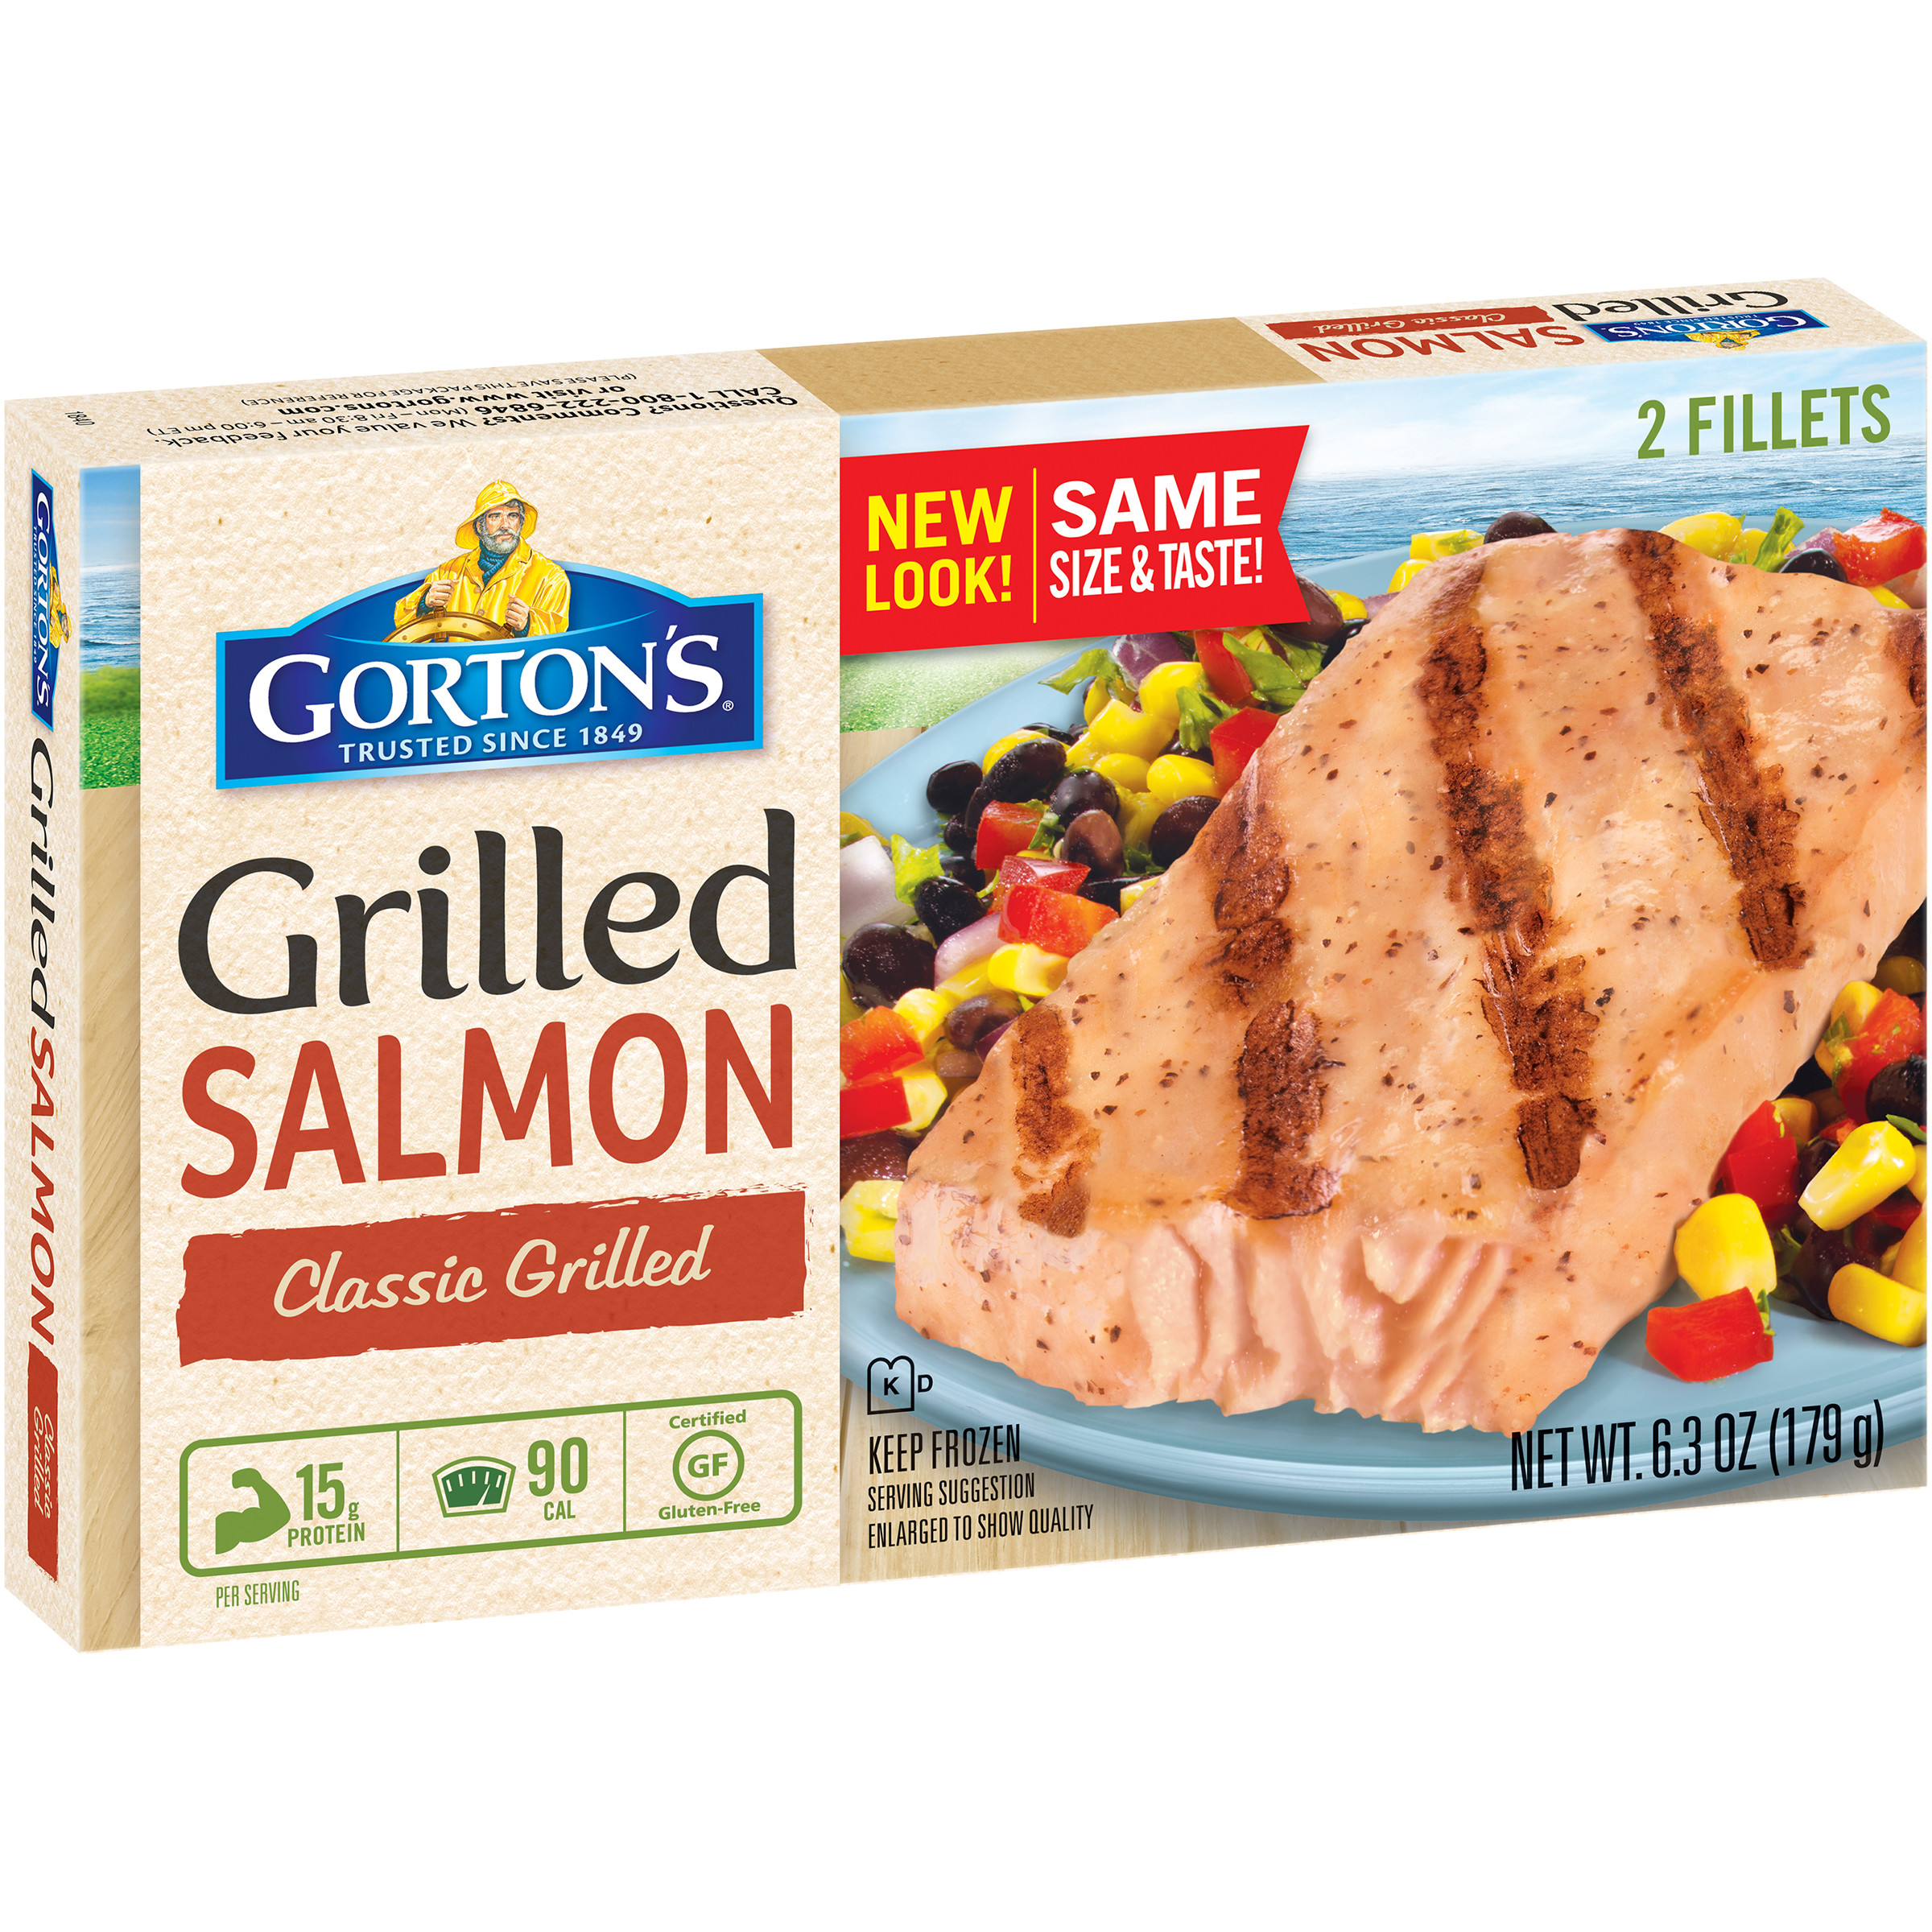 Smoked Salmon Walmart
 Salmon Fillets 2 lbs Walmart